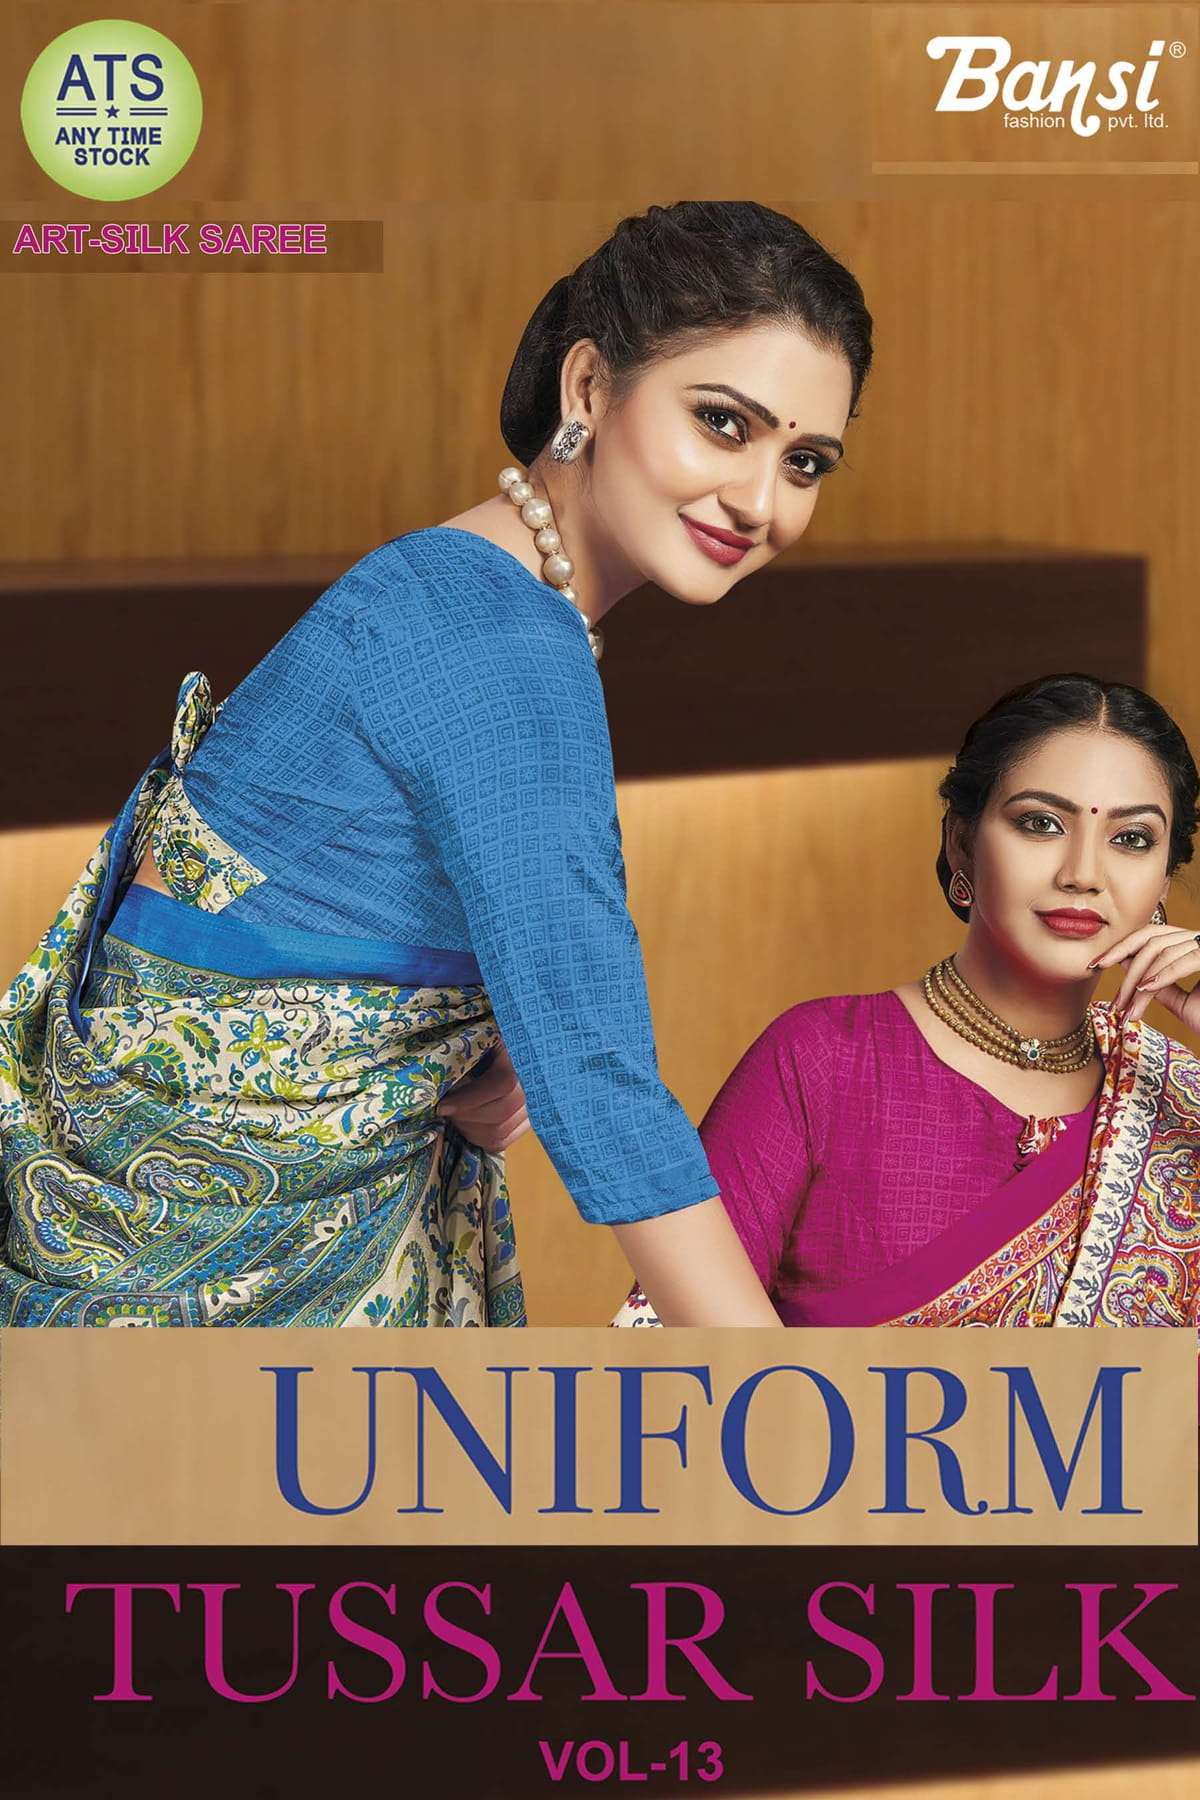 bansi tussar silk vol 13 crackle hospitality event wear unform saree collection  